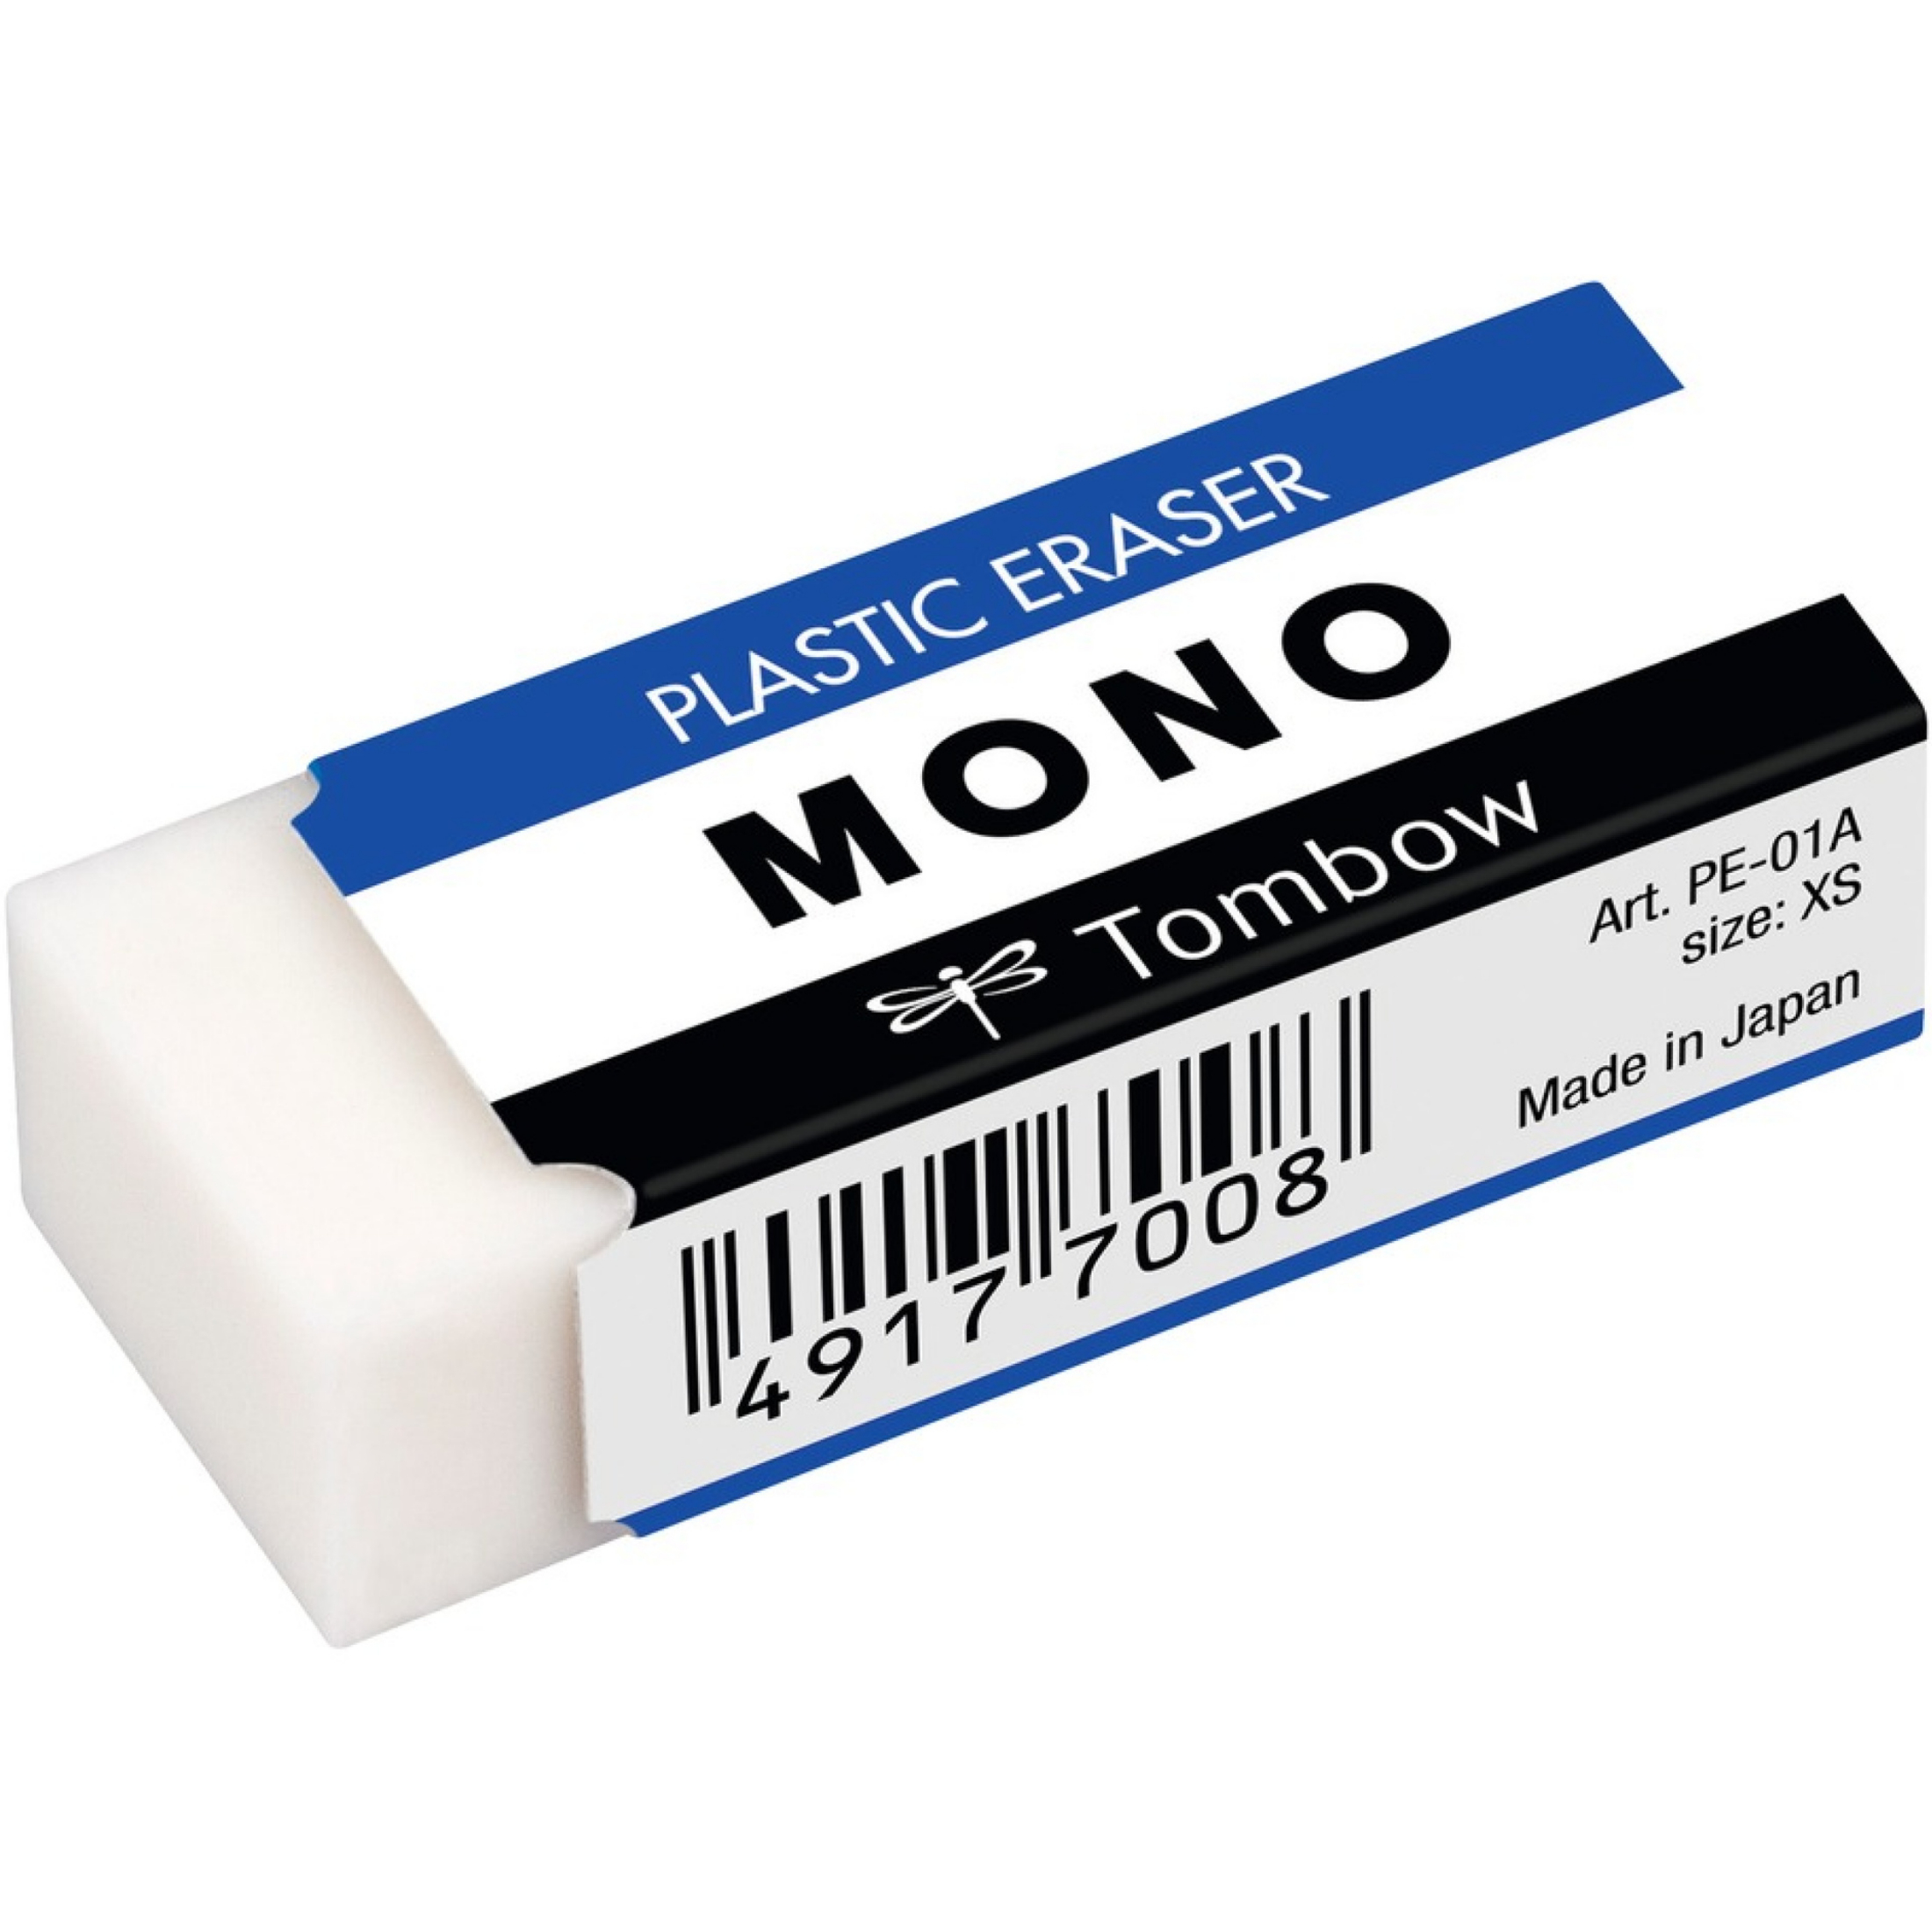 Borracha branca Mono XS da Tombow.